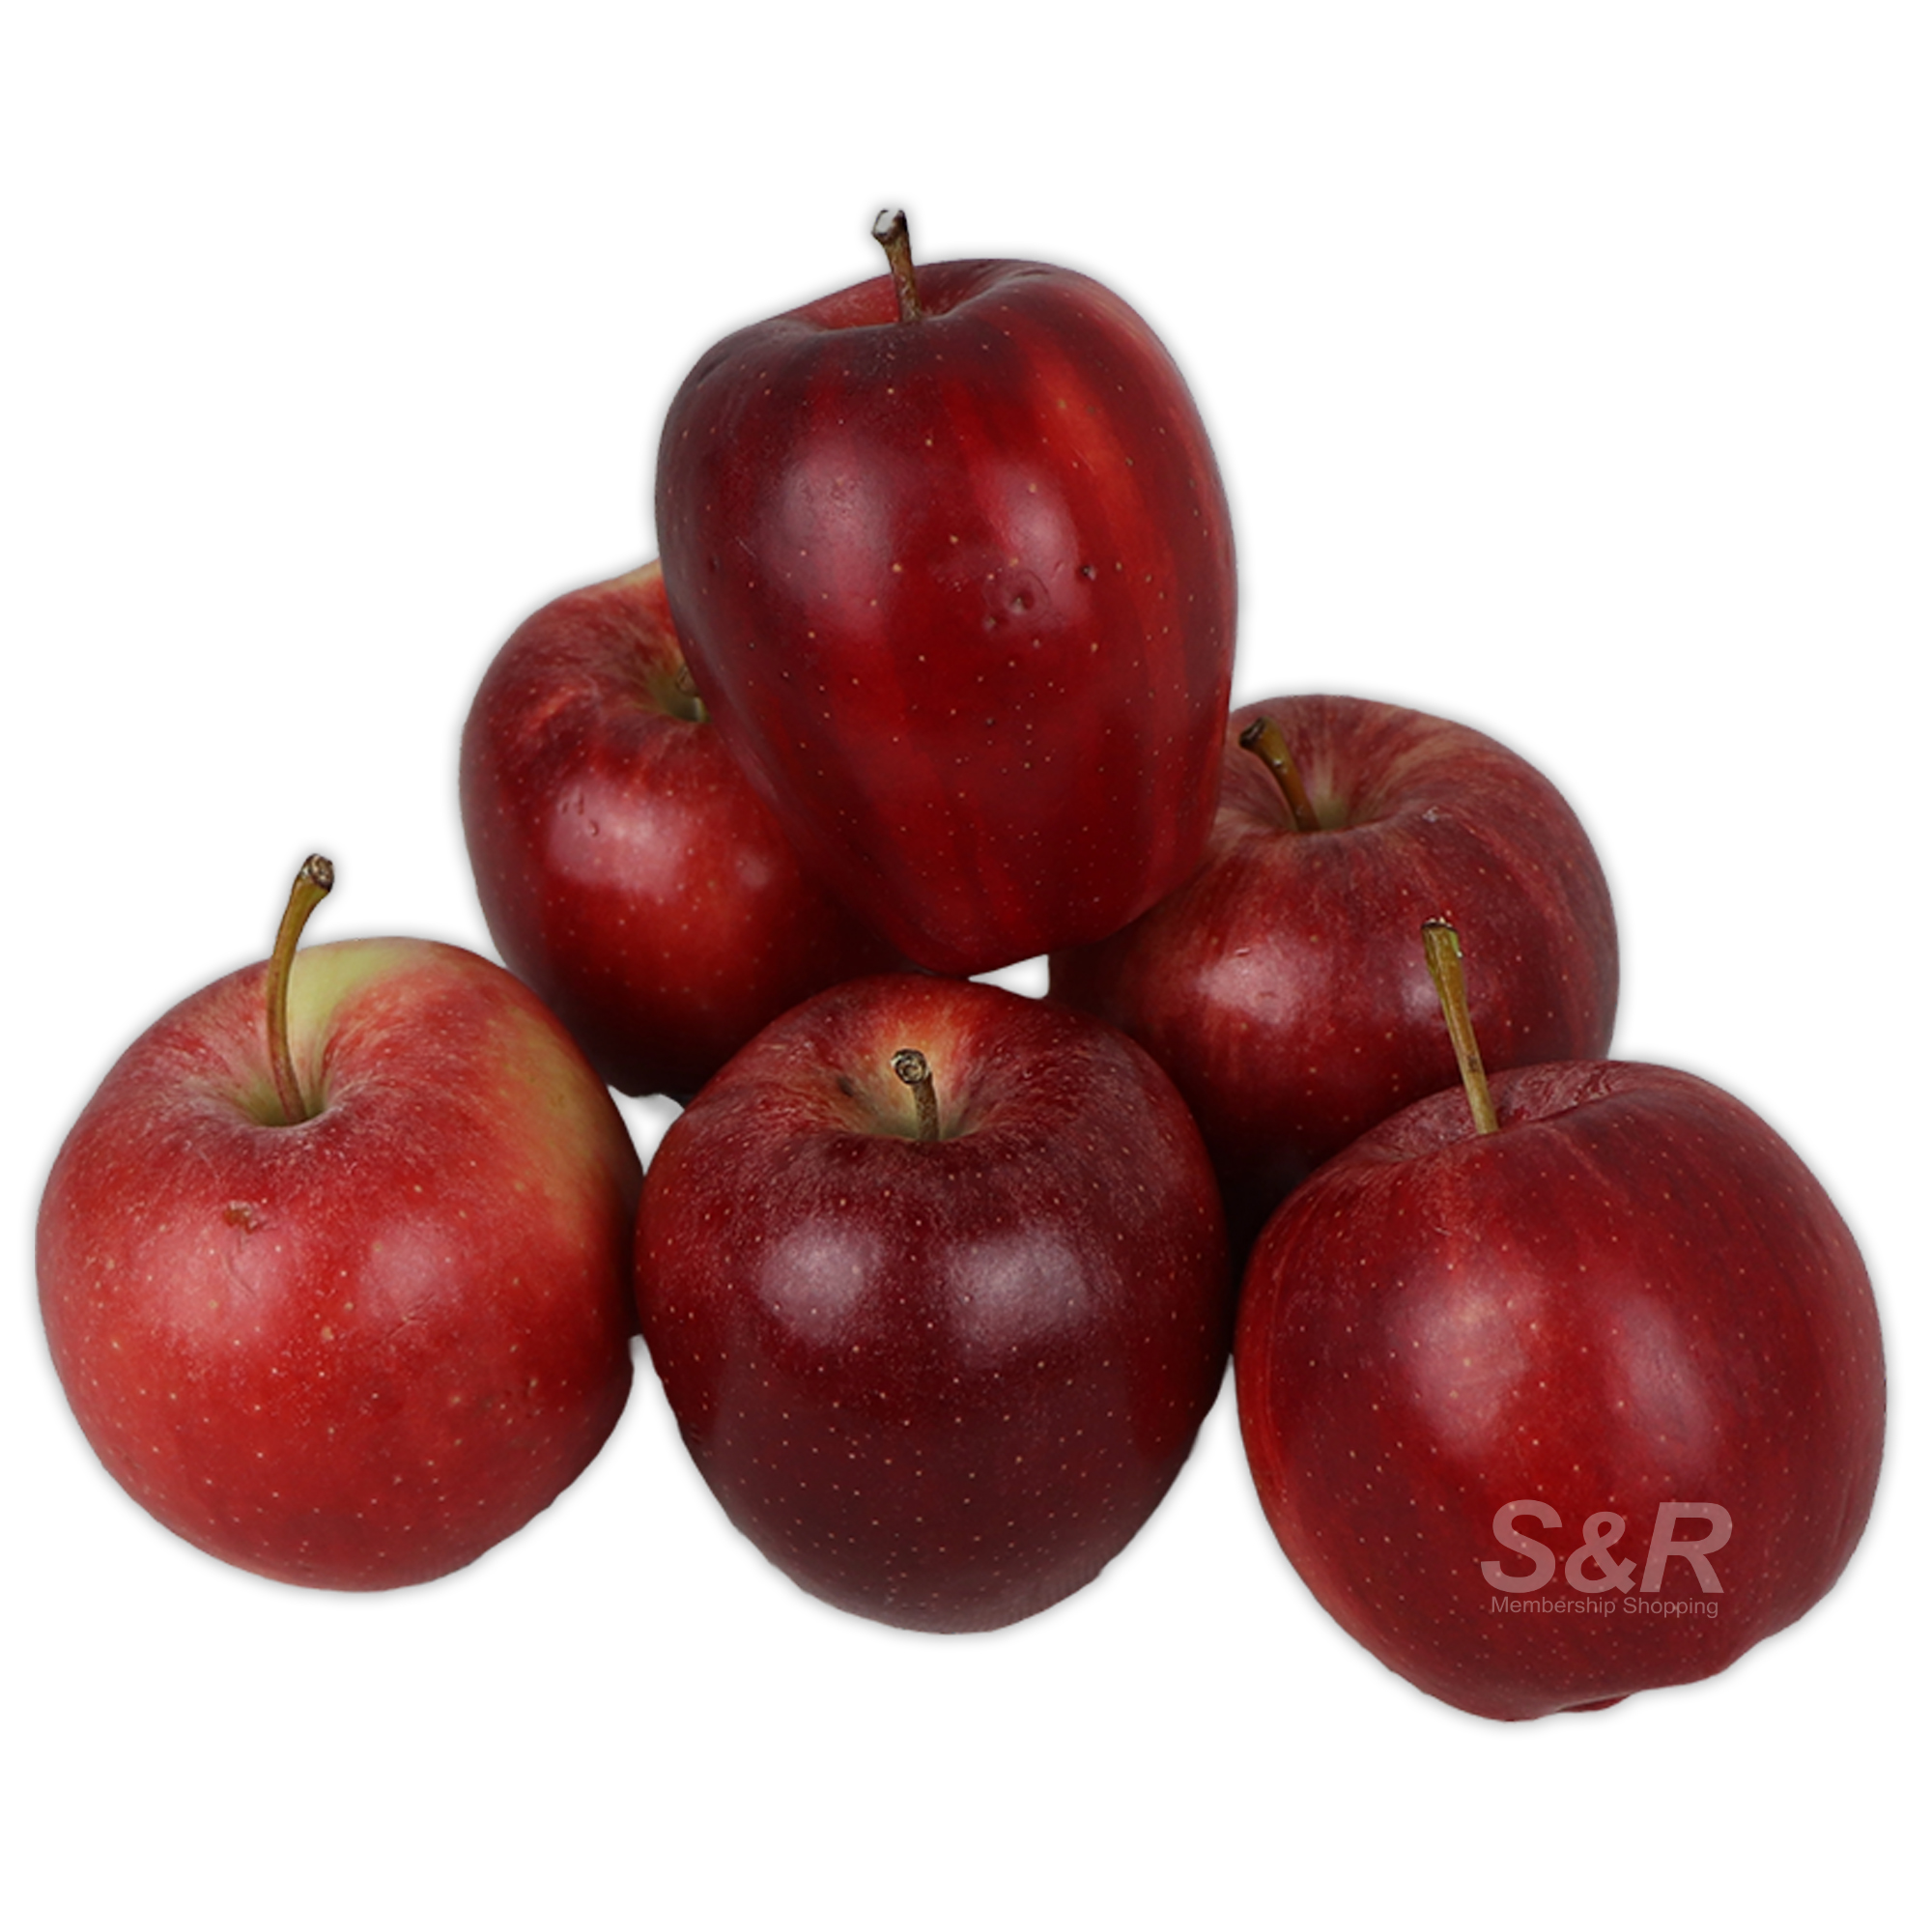 S&R Gala Apples 6pcs